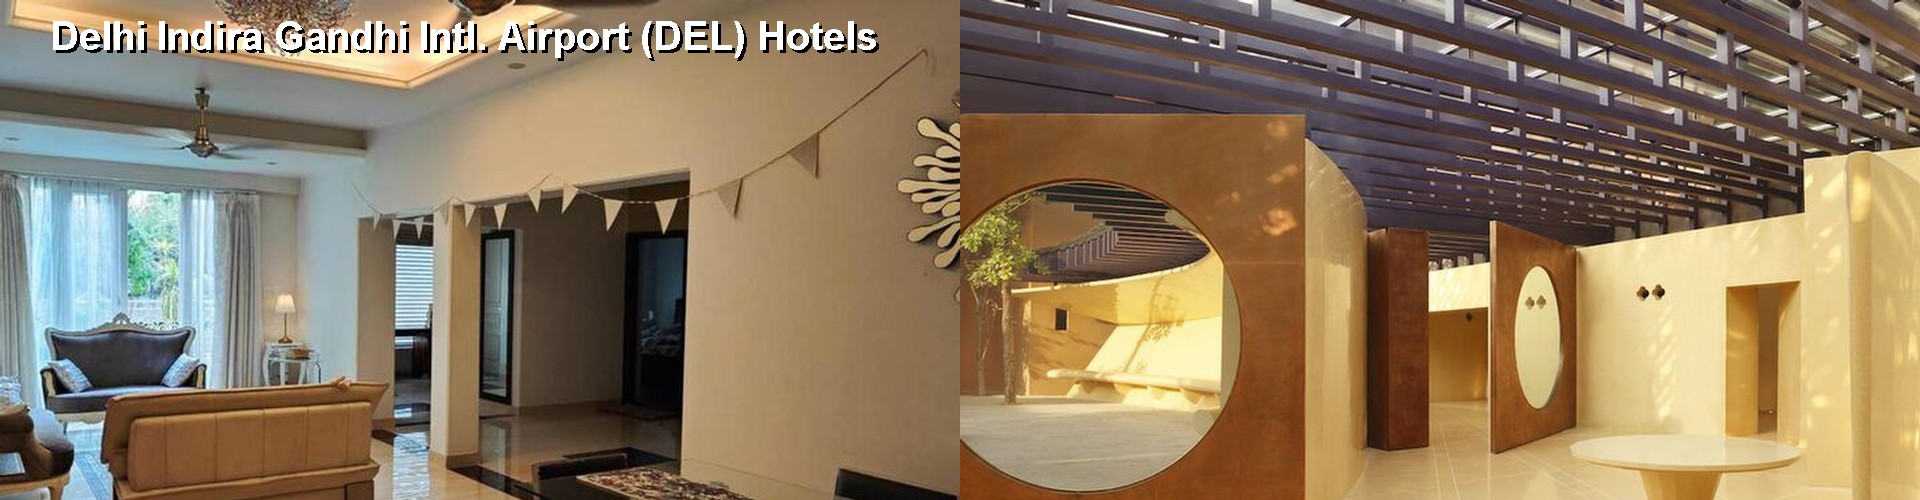 4 Best Hotels near Delhi Indira Gandhi Intl. Airport (DEL)